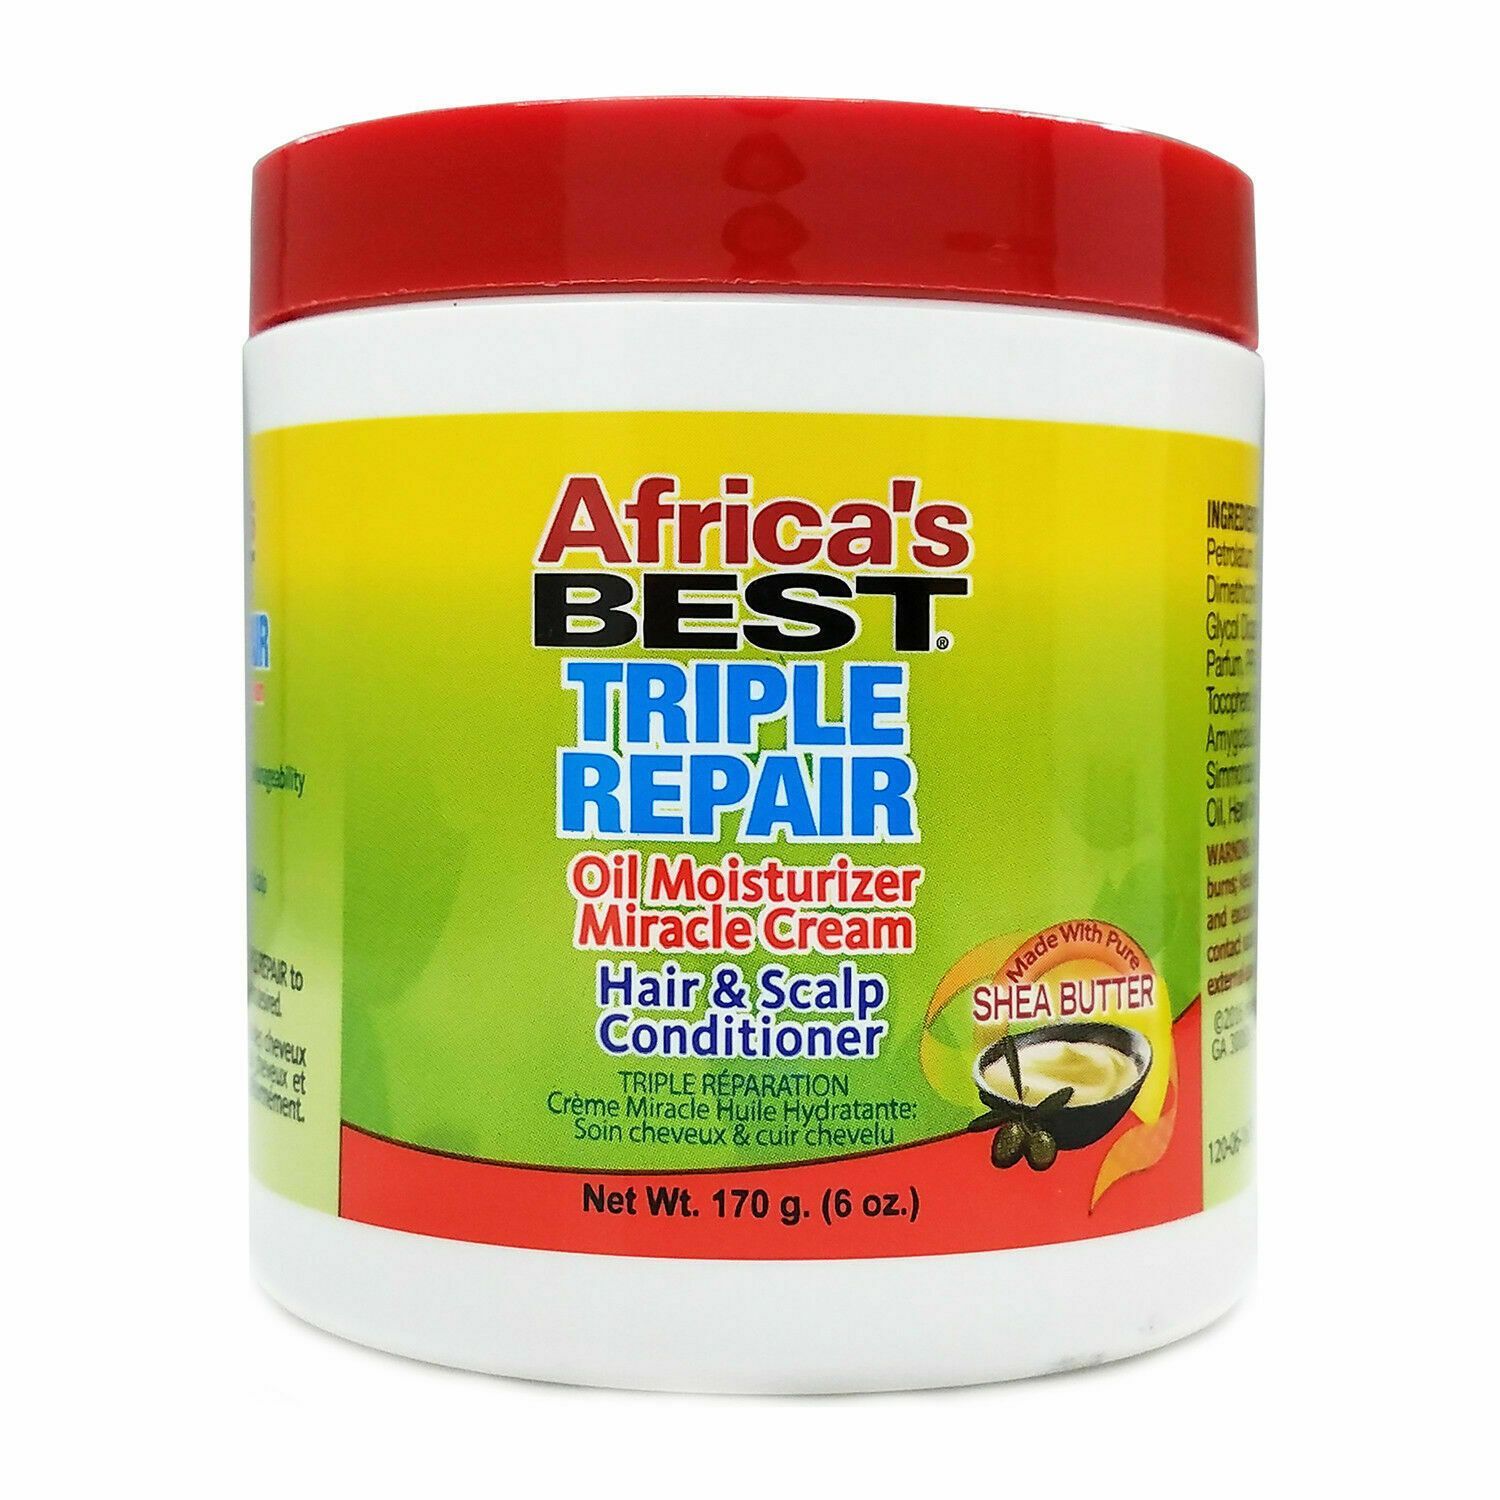 Africa's Best Triple Repair Oil Moisturizer Miracle Cream 5.25oz